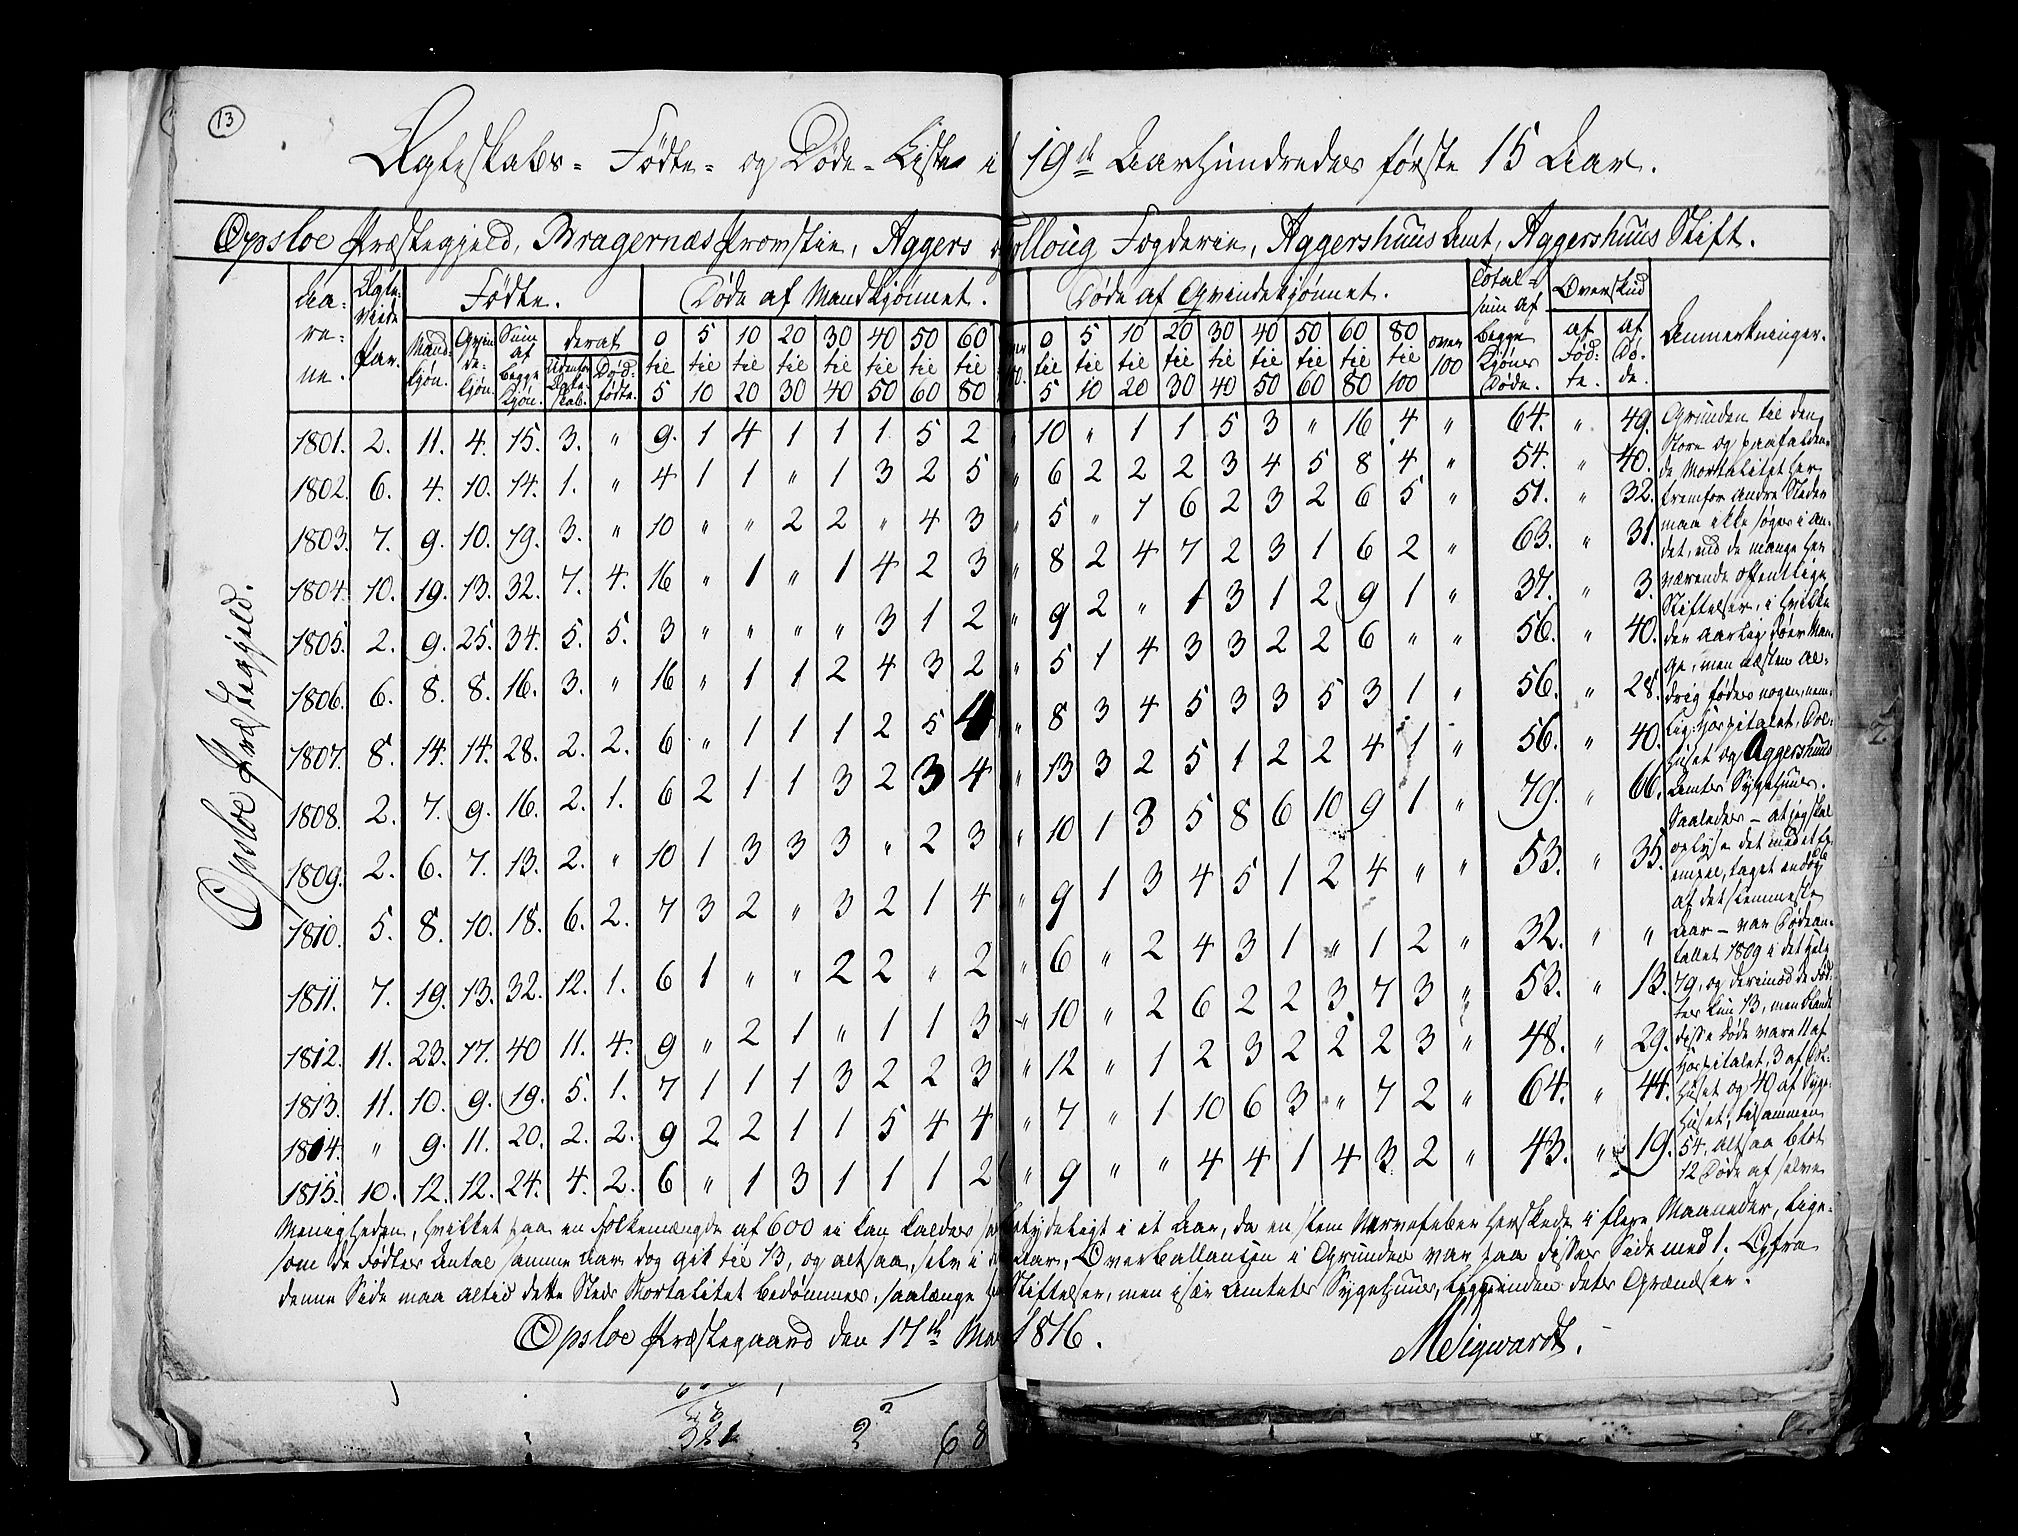 RA, Census 1815, vol. 6: Akershus stift and Kristiansand stift, 1815, p. 13